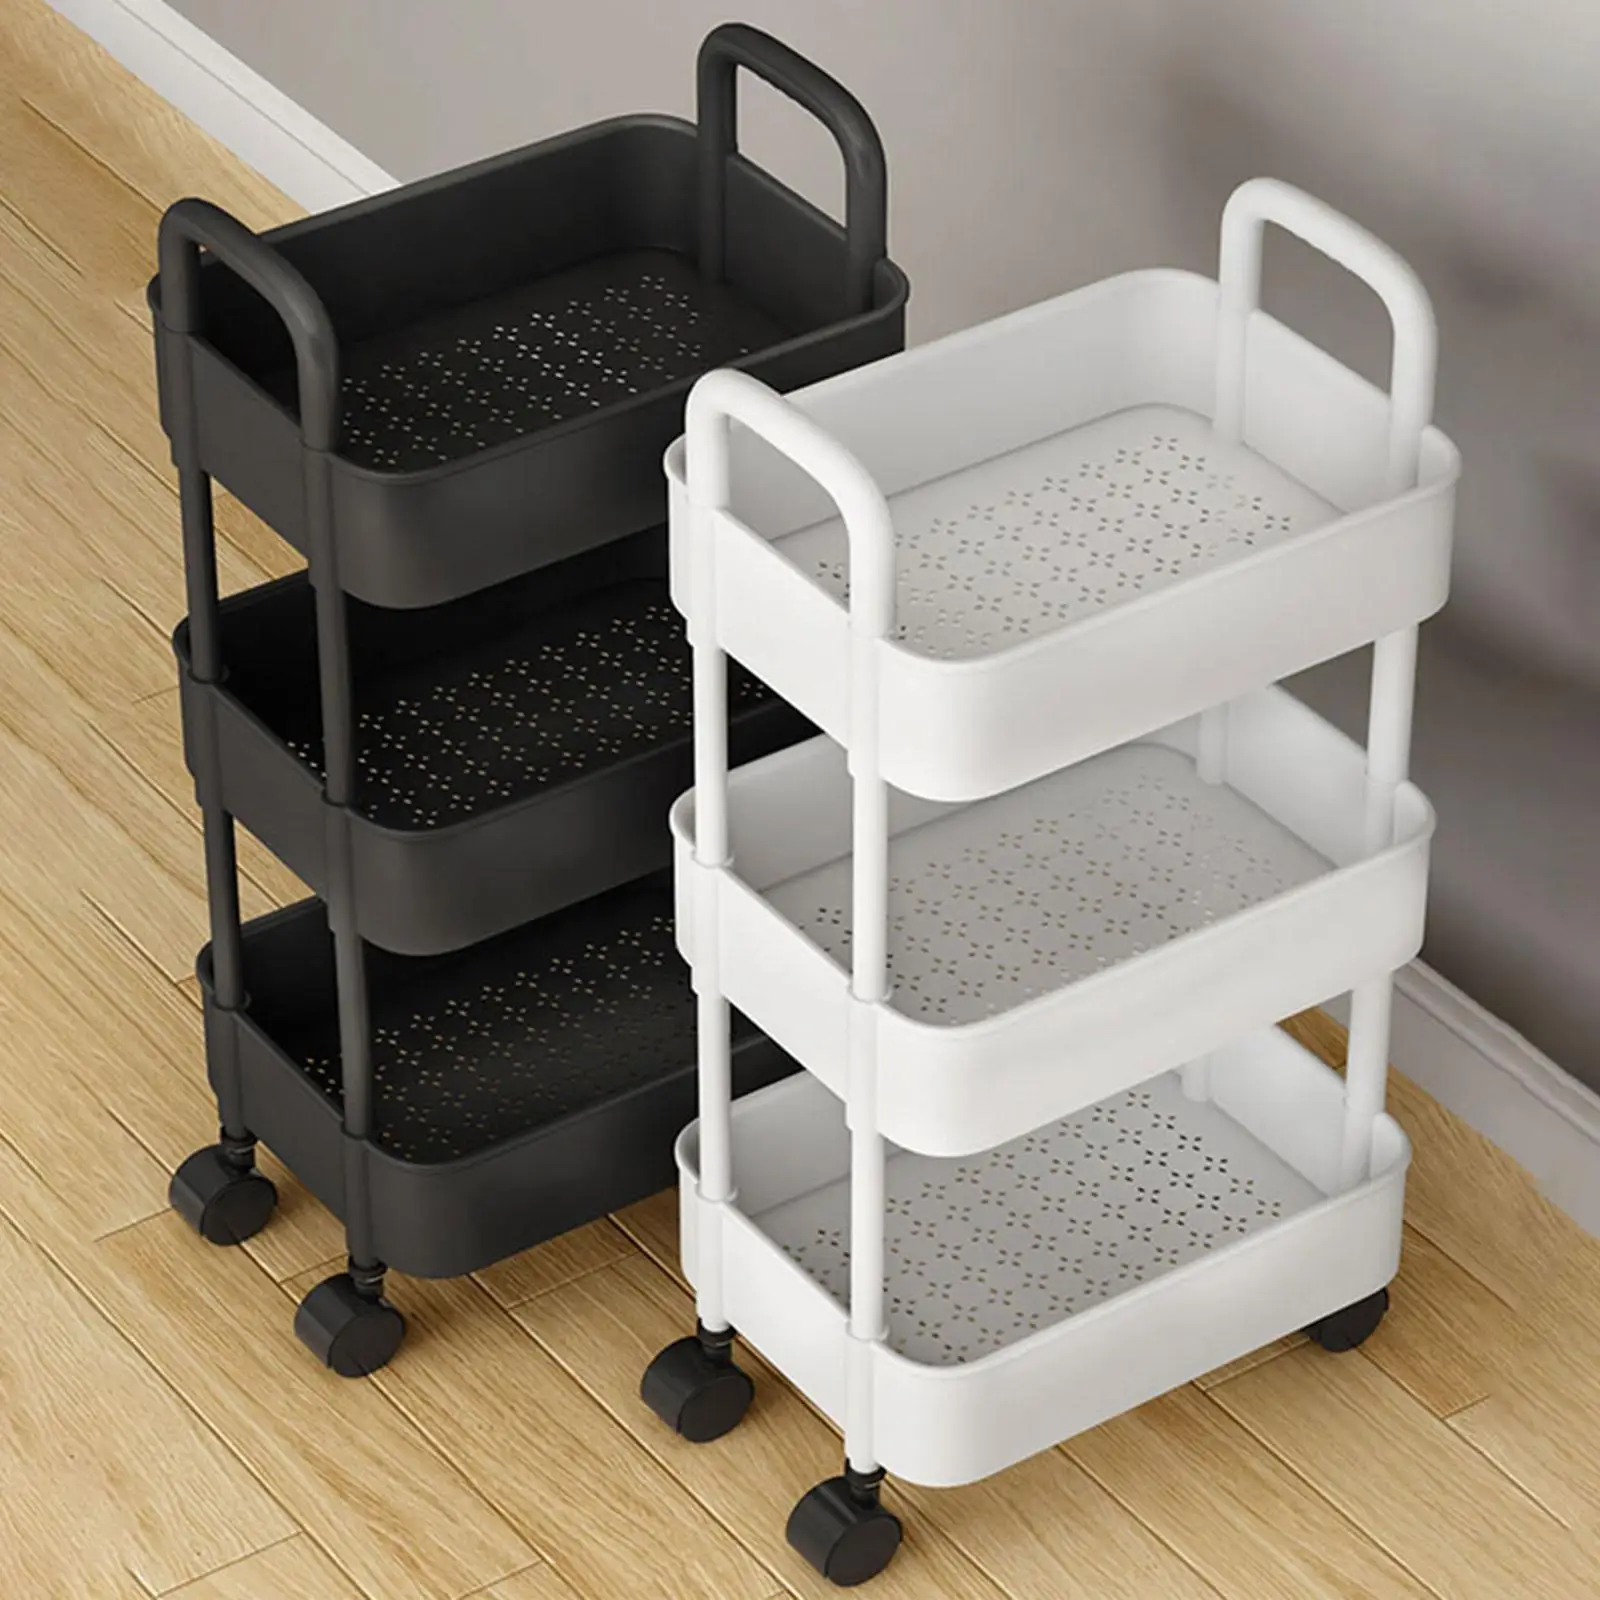 3 Tier Mobile Utility Cart Free Standing Corner Shelf Storage Shelves